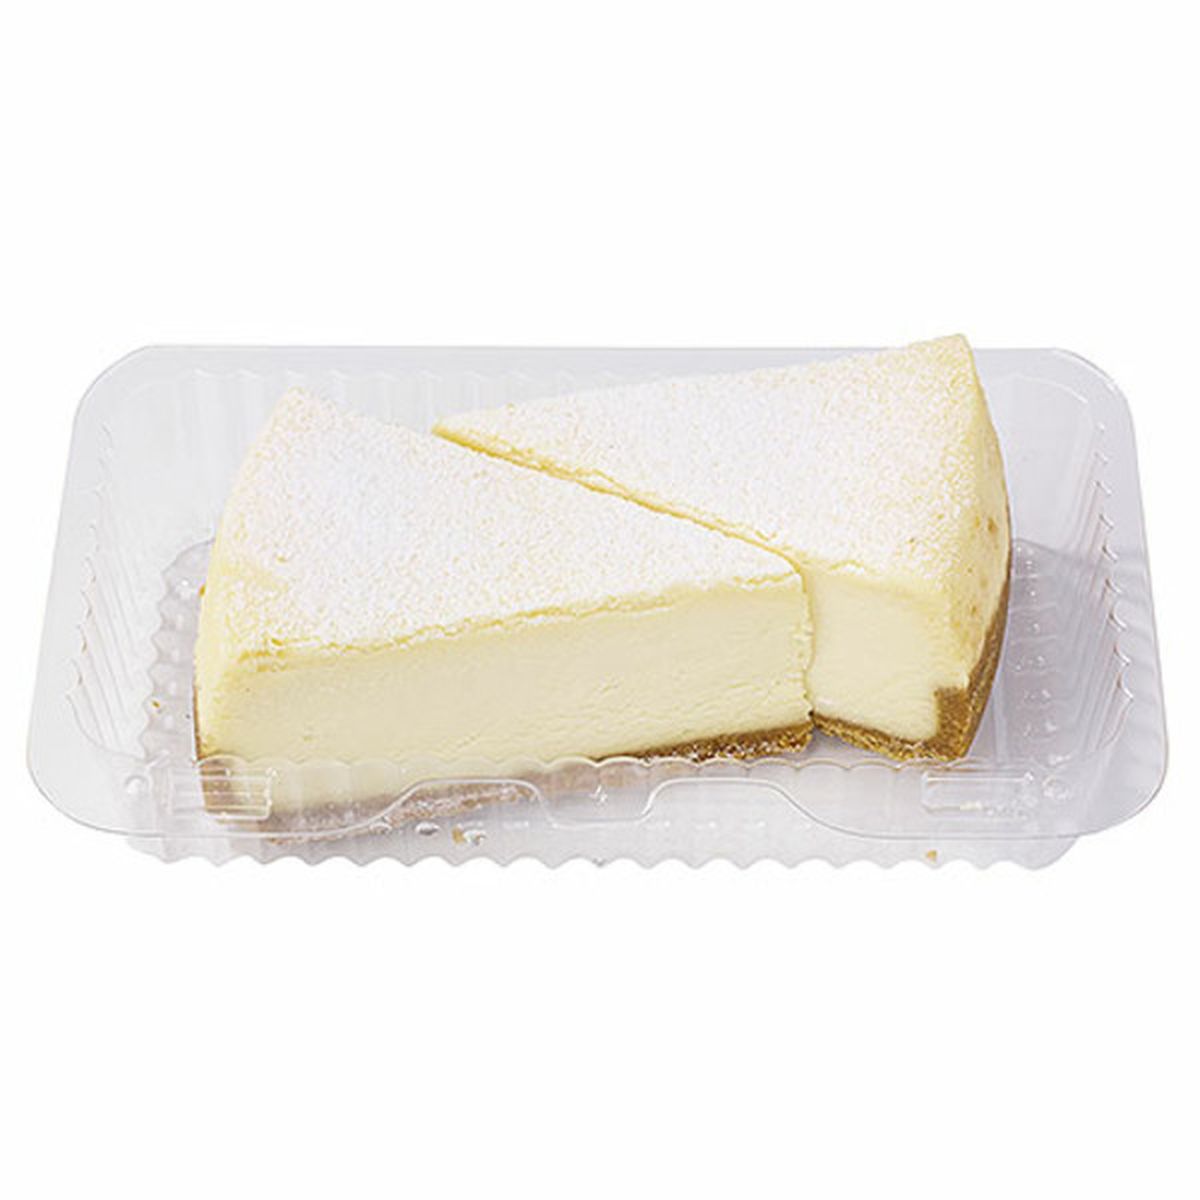 Calories in Wegmans Ultimate Plain Cheesecake Slice, 2 pack